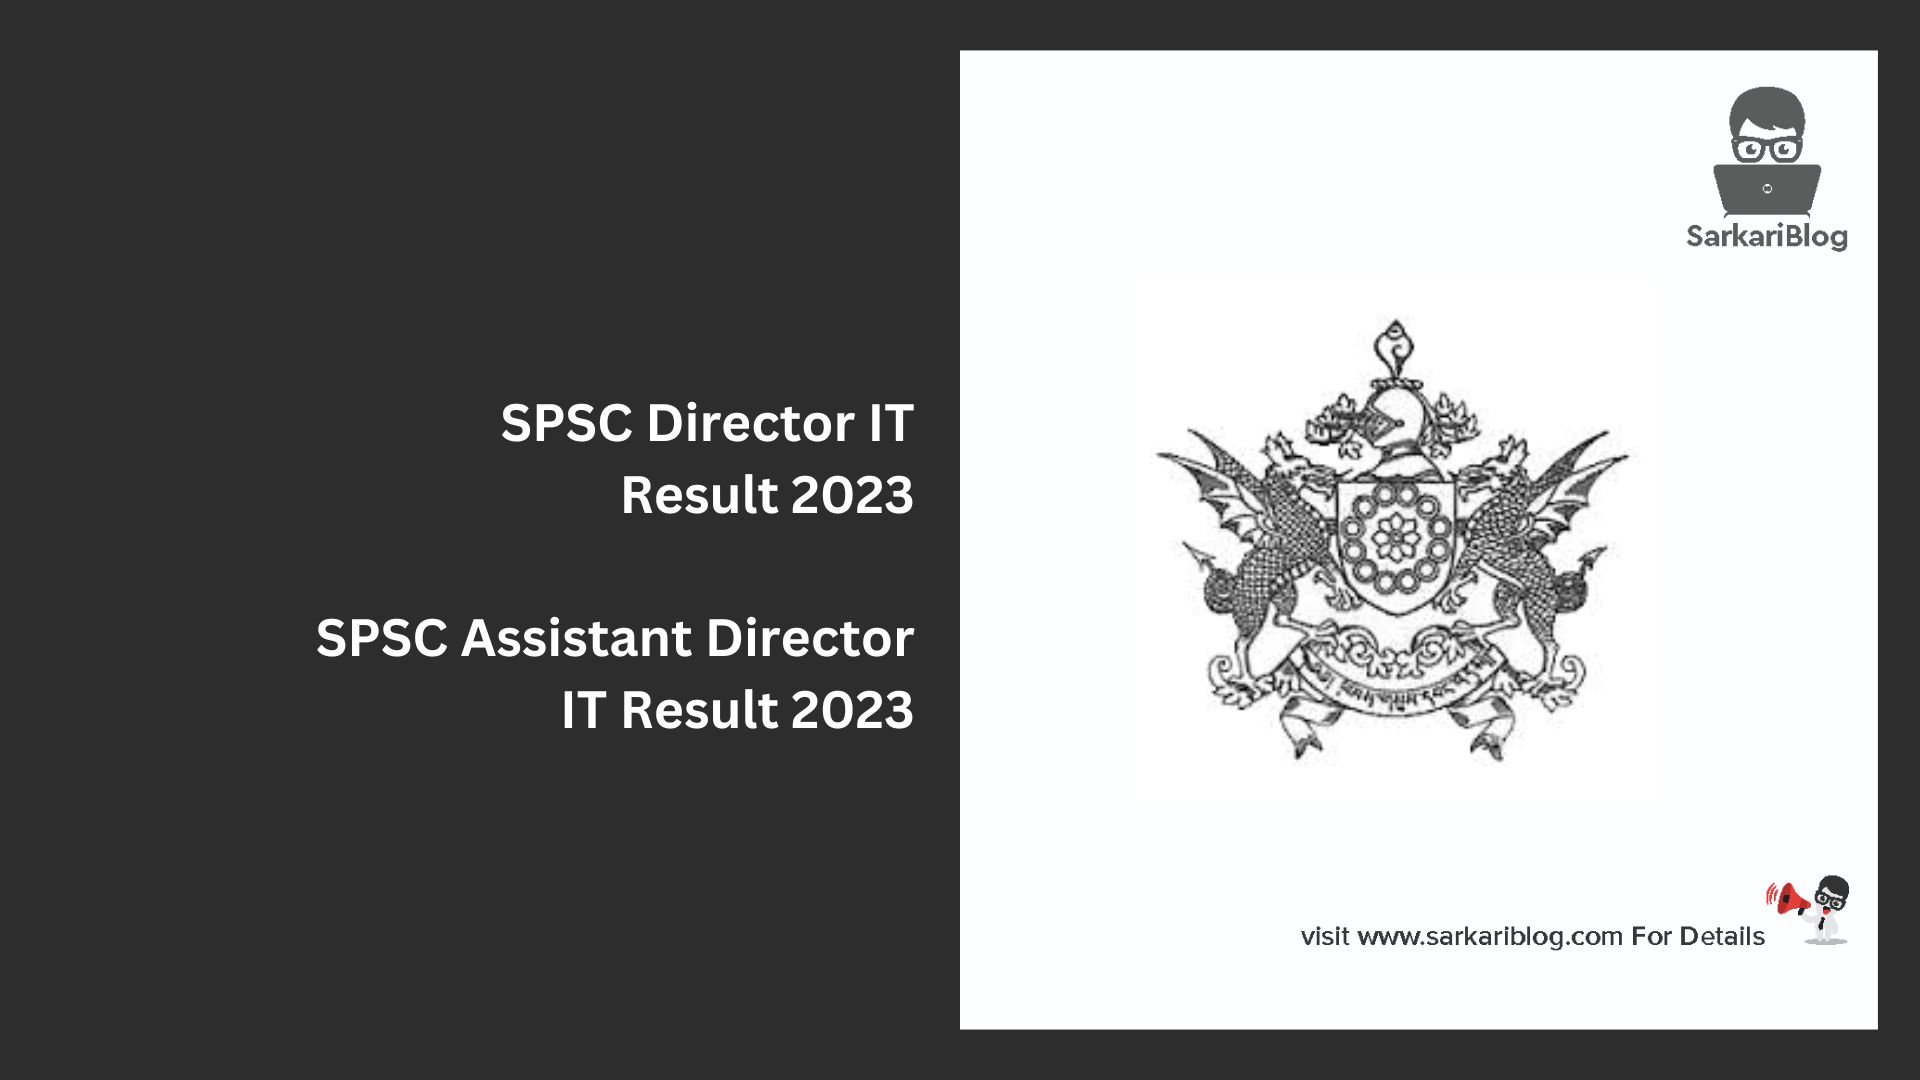 SPSC Director IT Result 2023